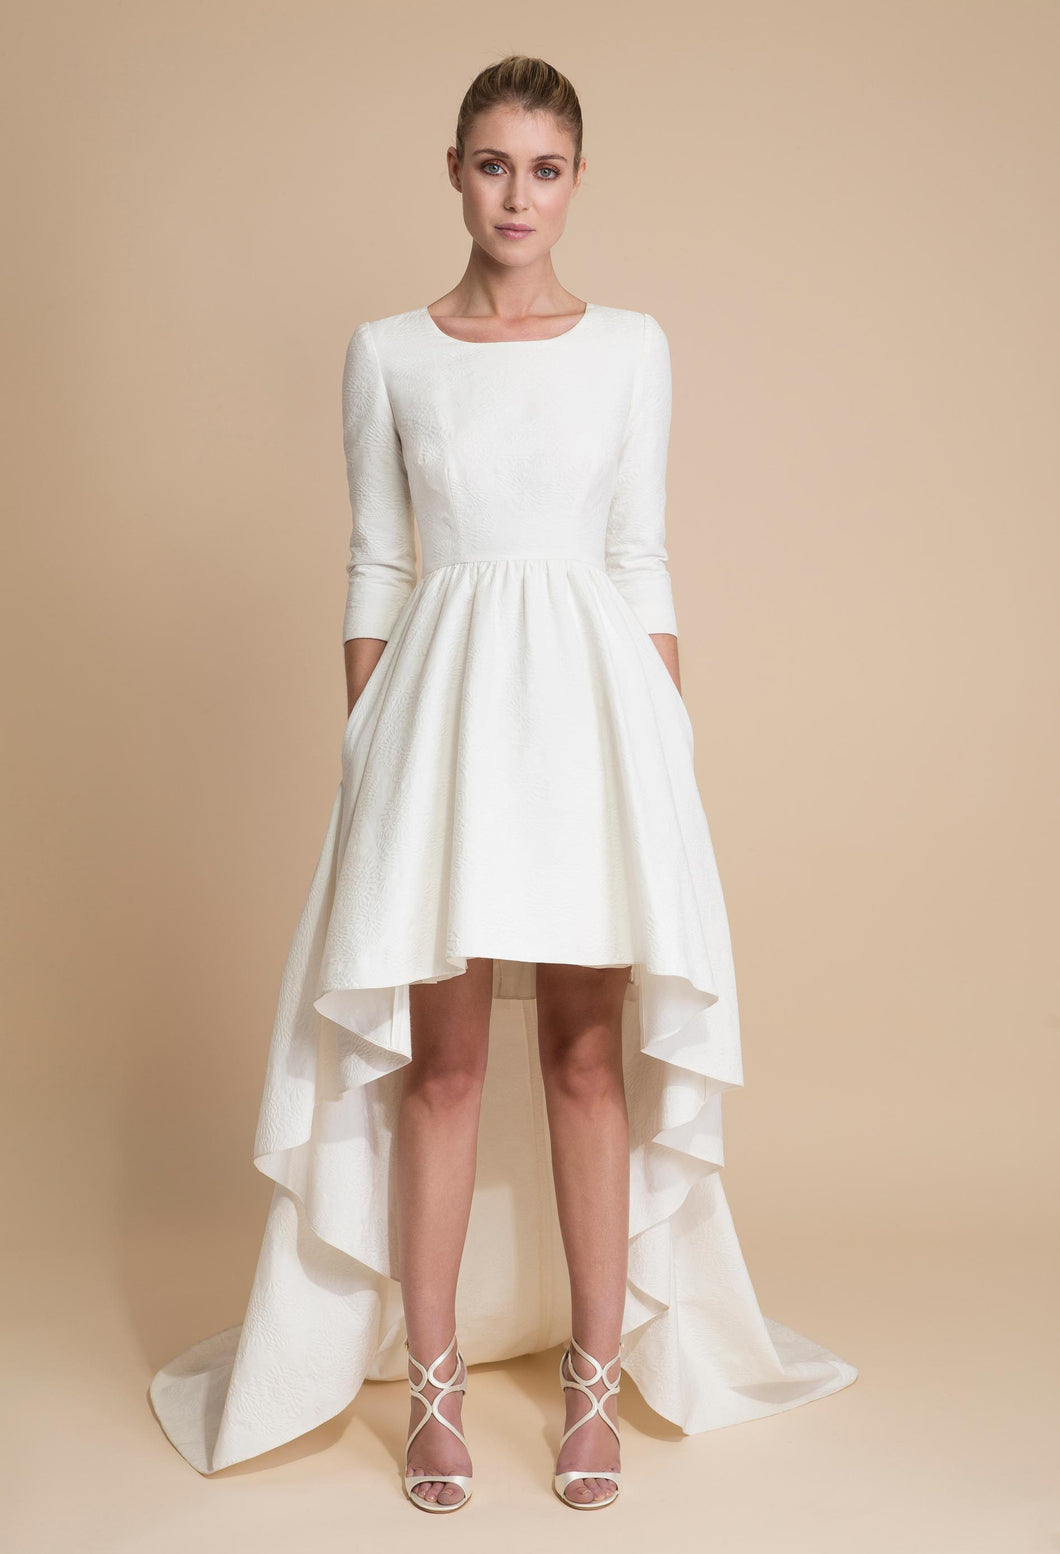 Delphine Manivet 'Florent' size 2 new wedding dress front view on model